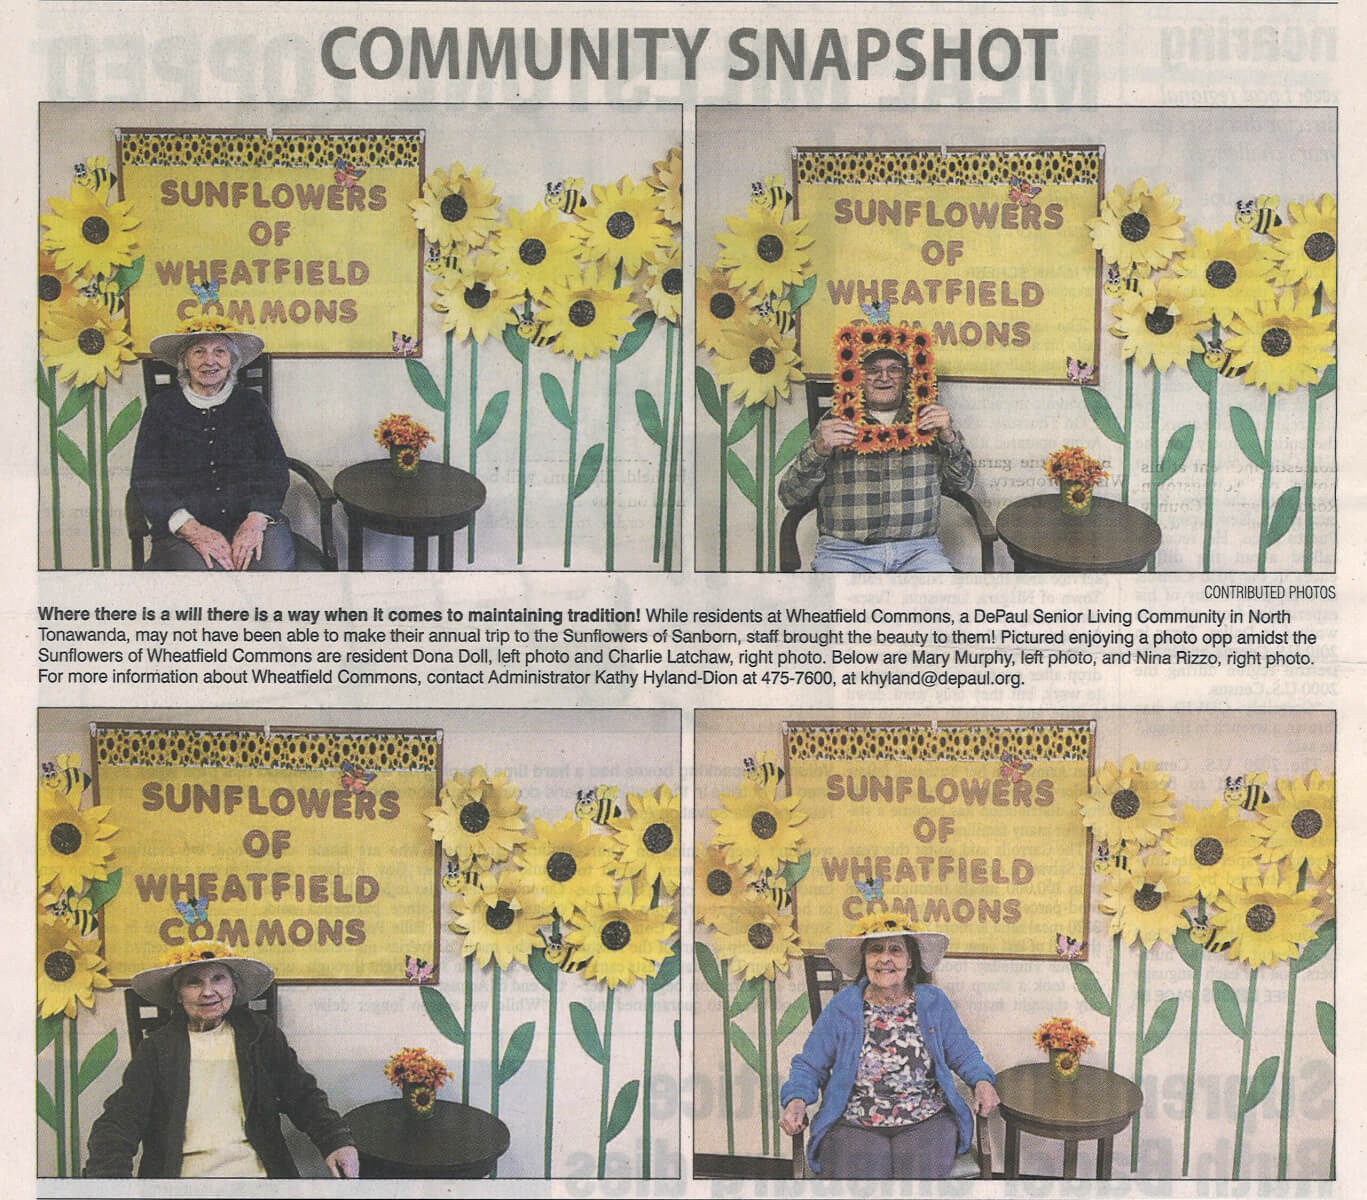 Wheatfield Commons Sunflowers, 9.19.20 Niagara Gazette